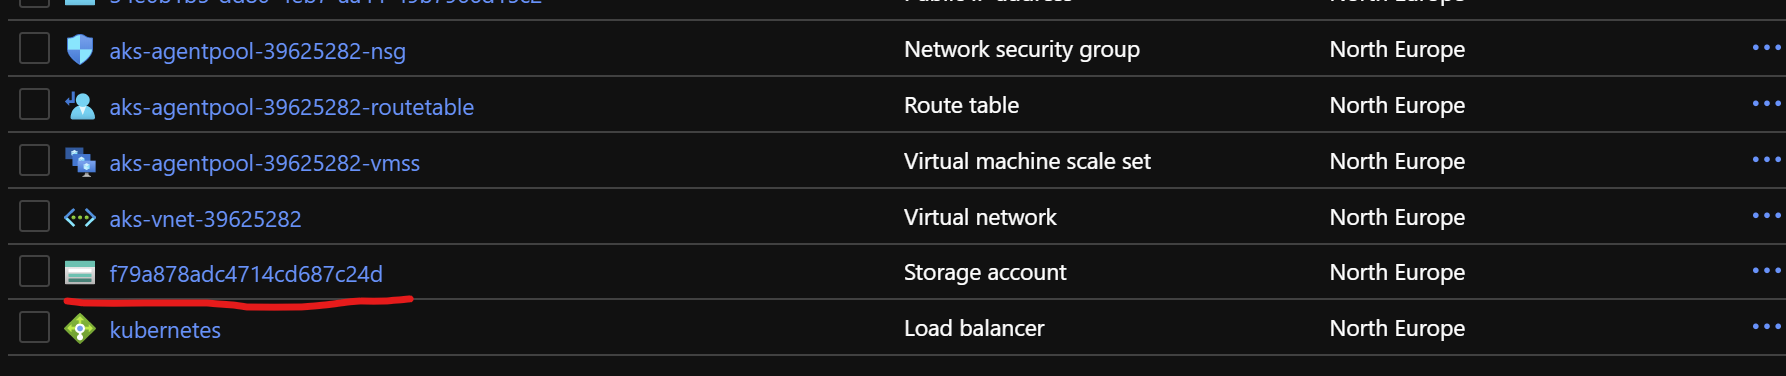 Azure Storage Account in Portal